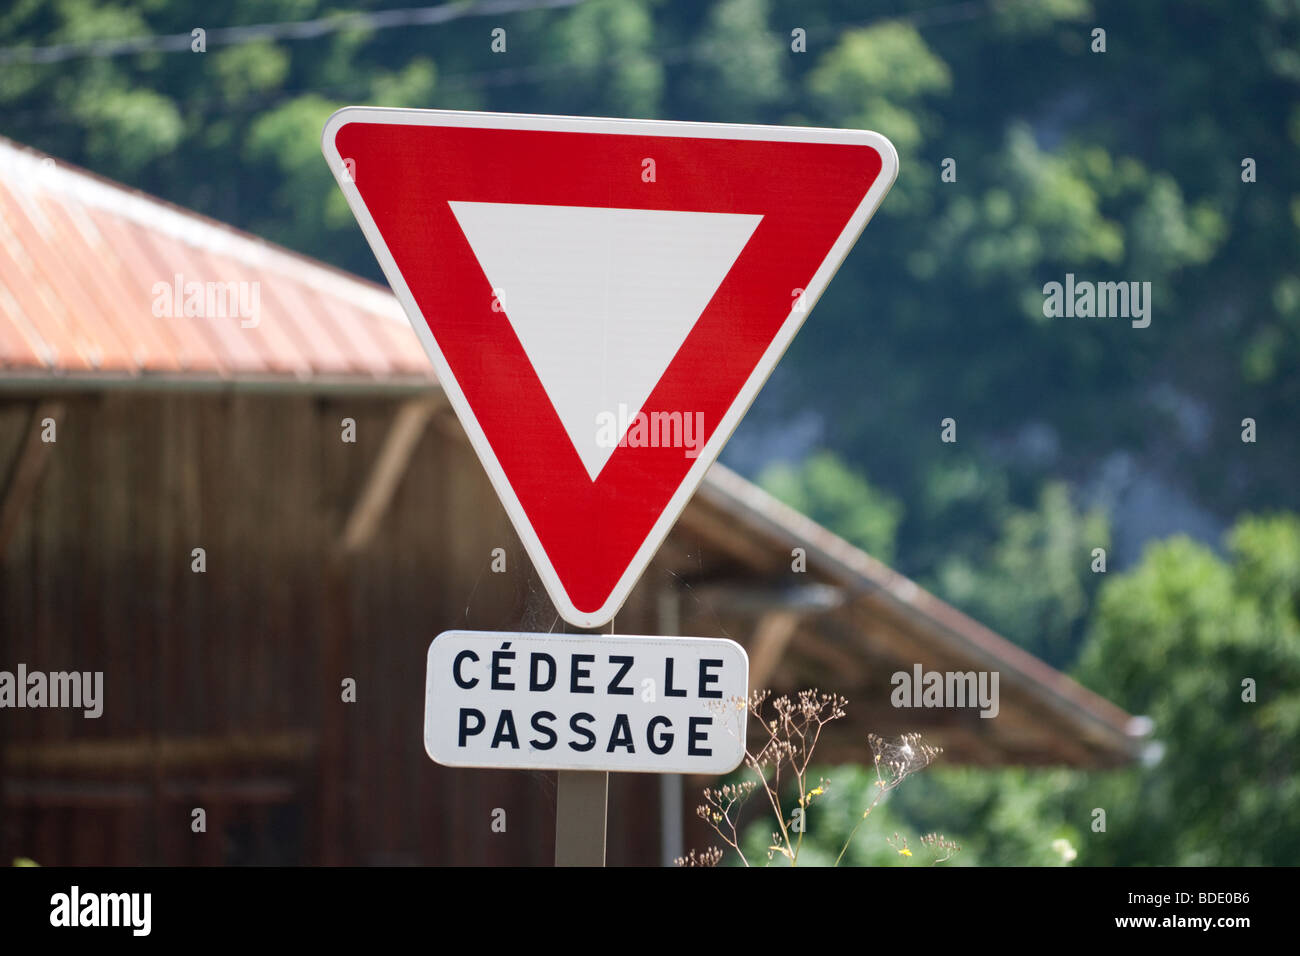 Ceder o Cedez francés le Passage de signo en cruce de carreteras Foto de stock